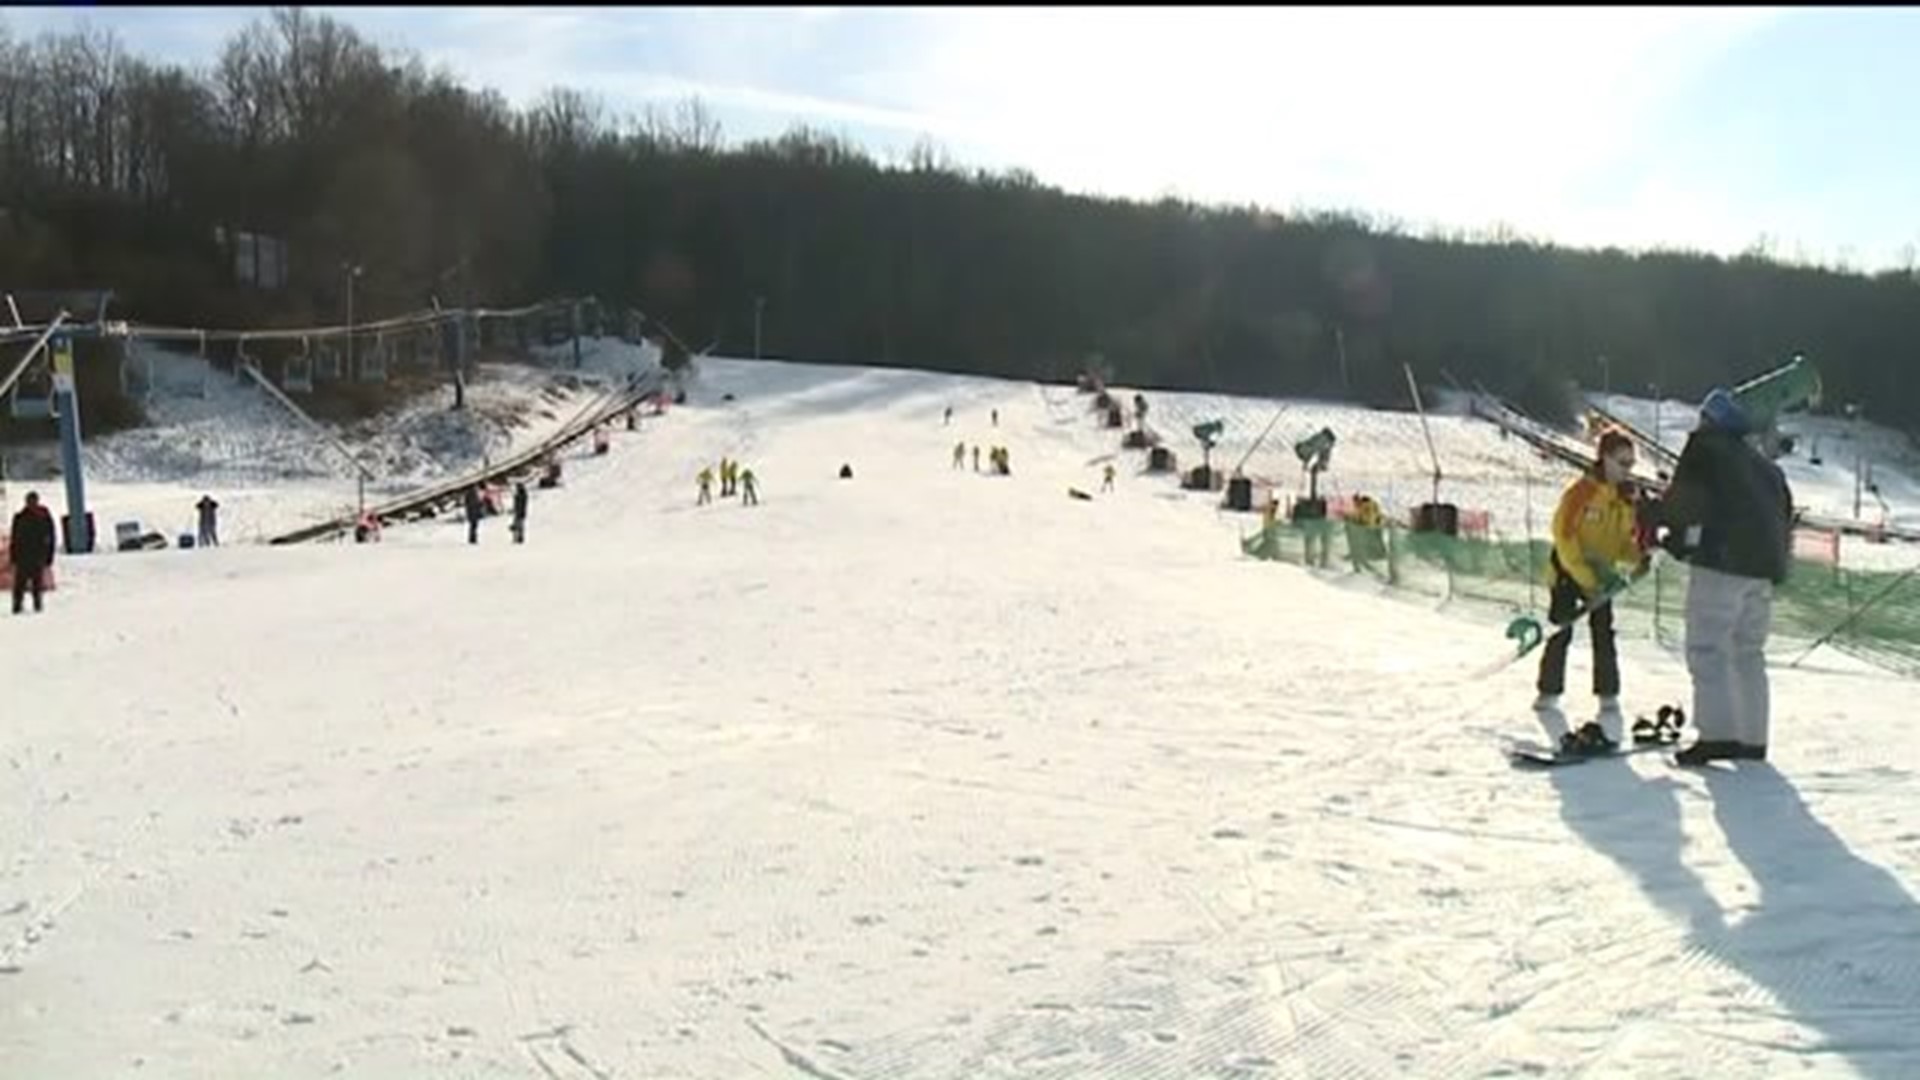 Ski Season Kicks Off in the Poconos